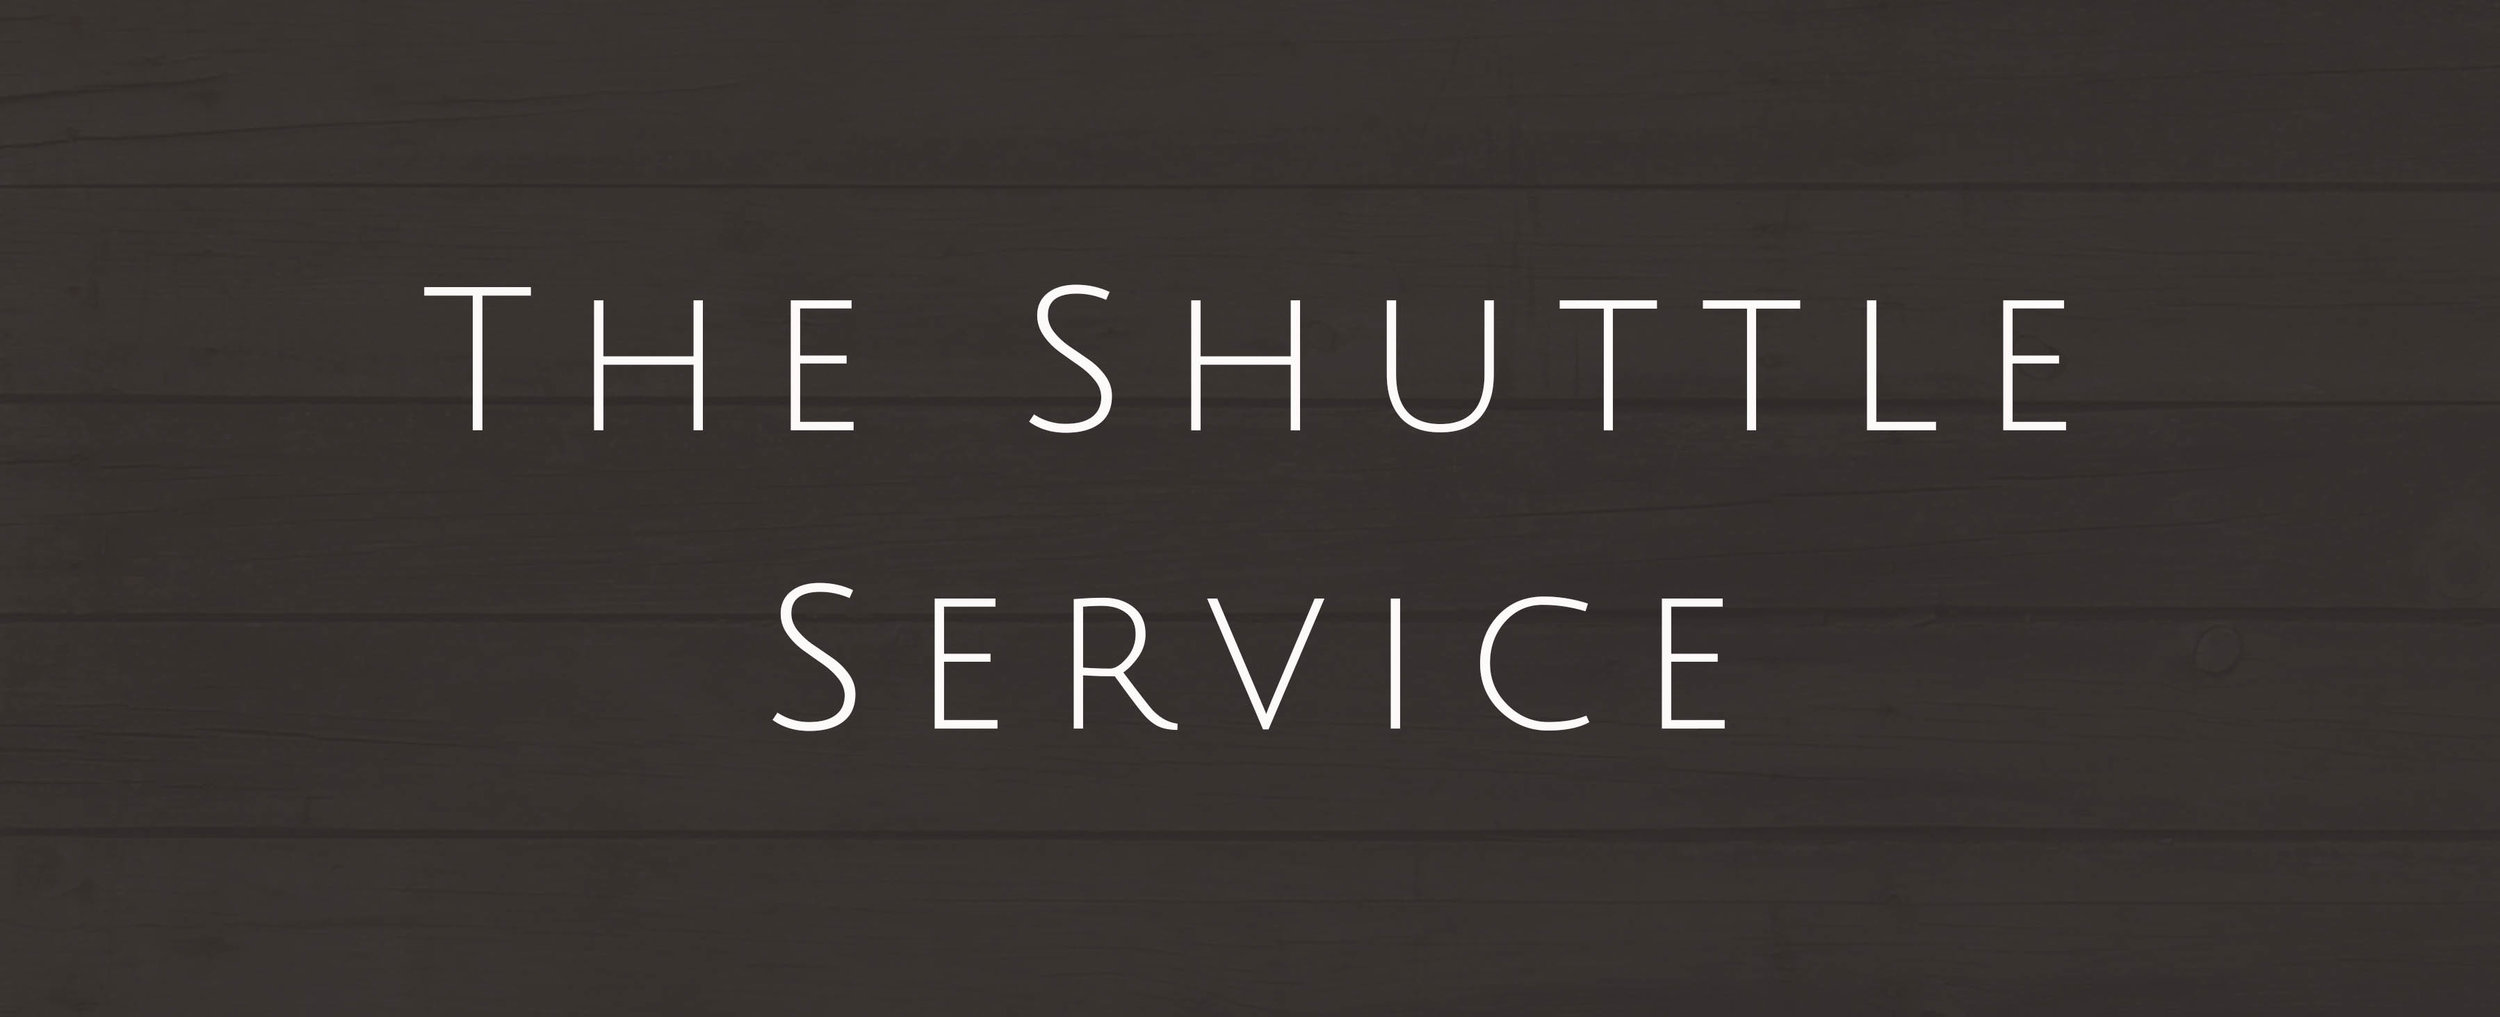 Zion - Shuttle Service.jpg